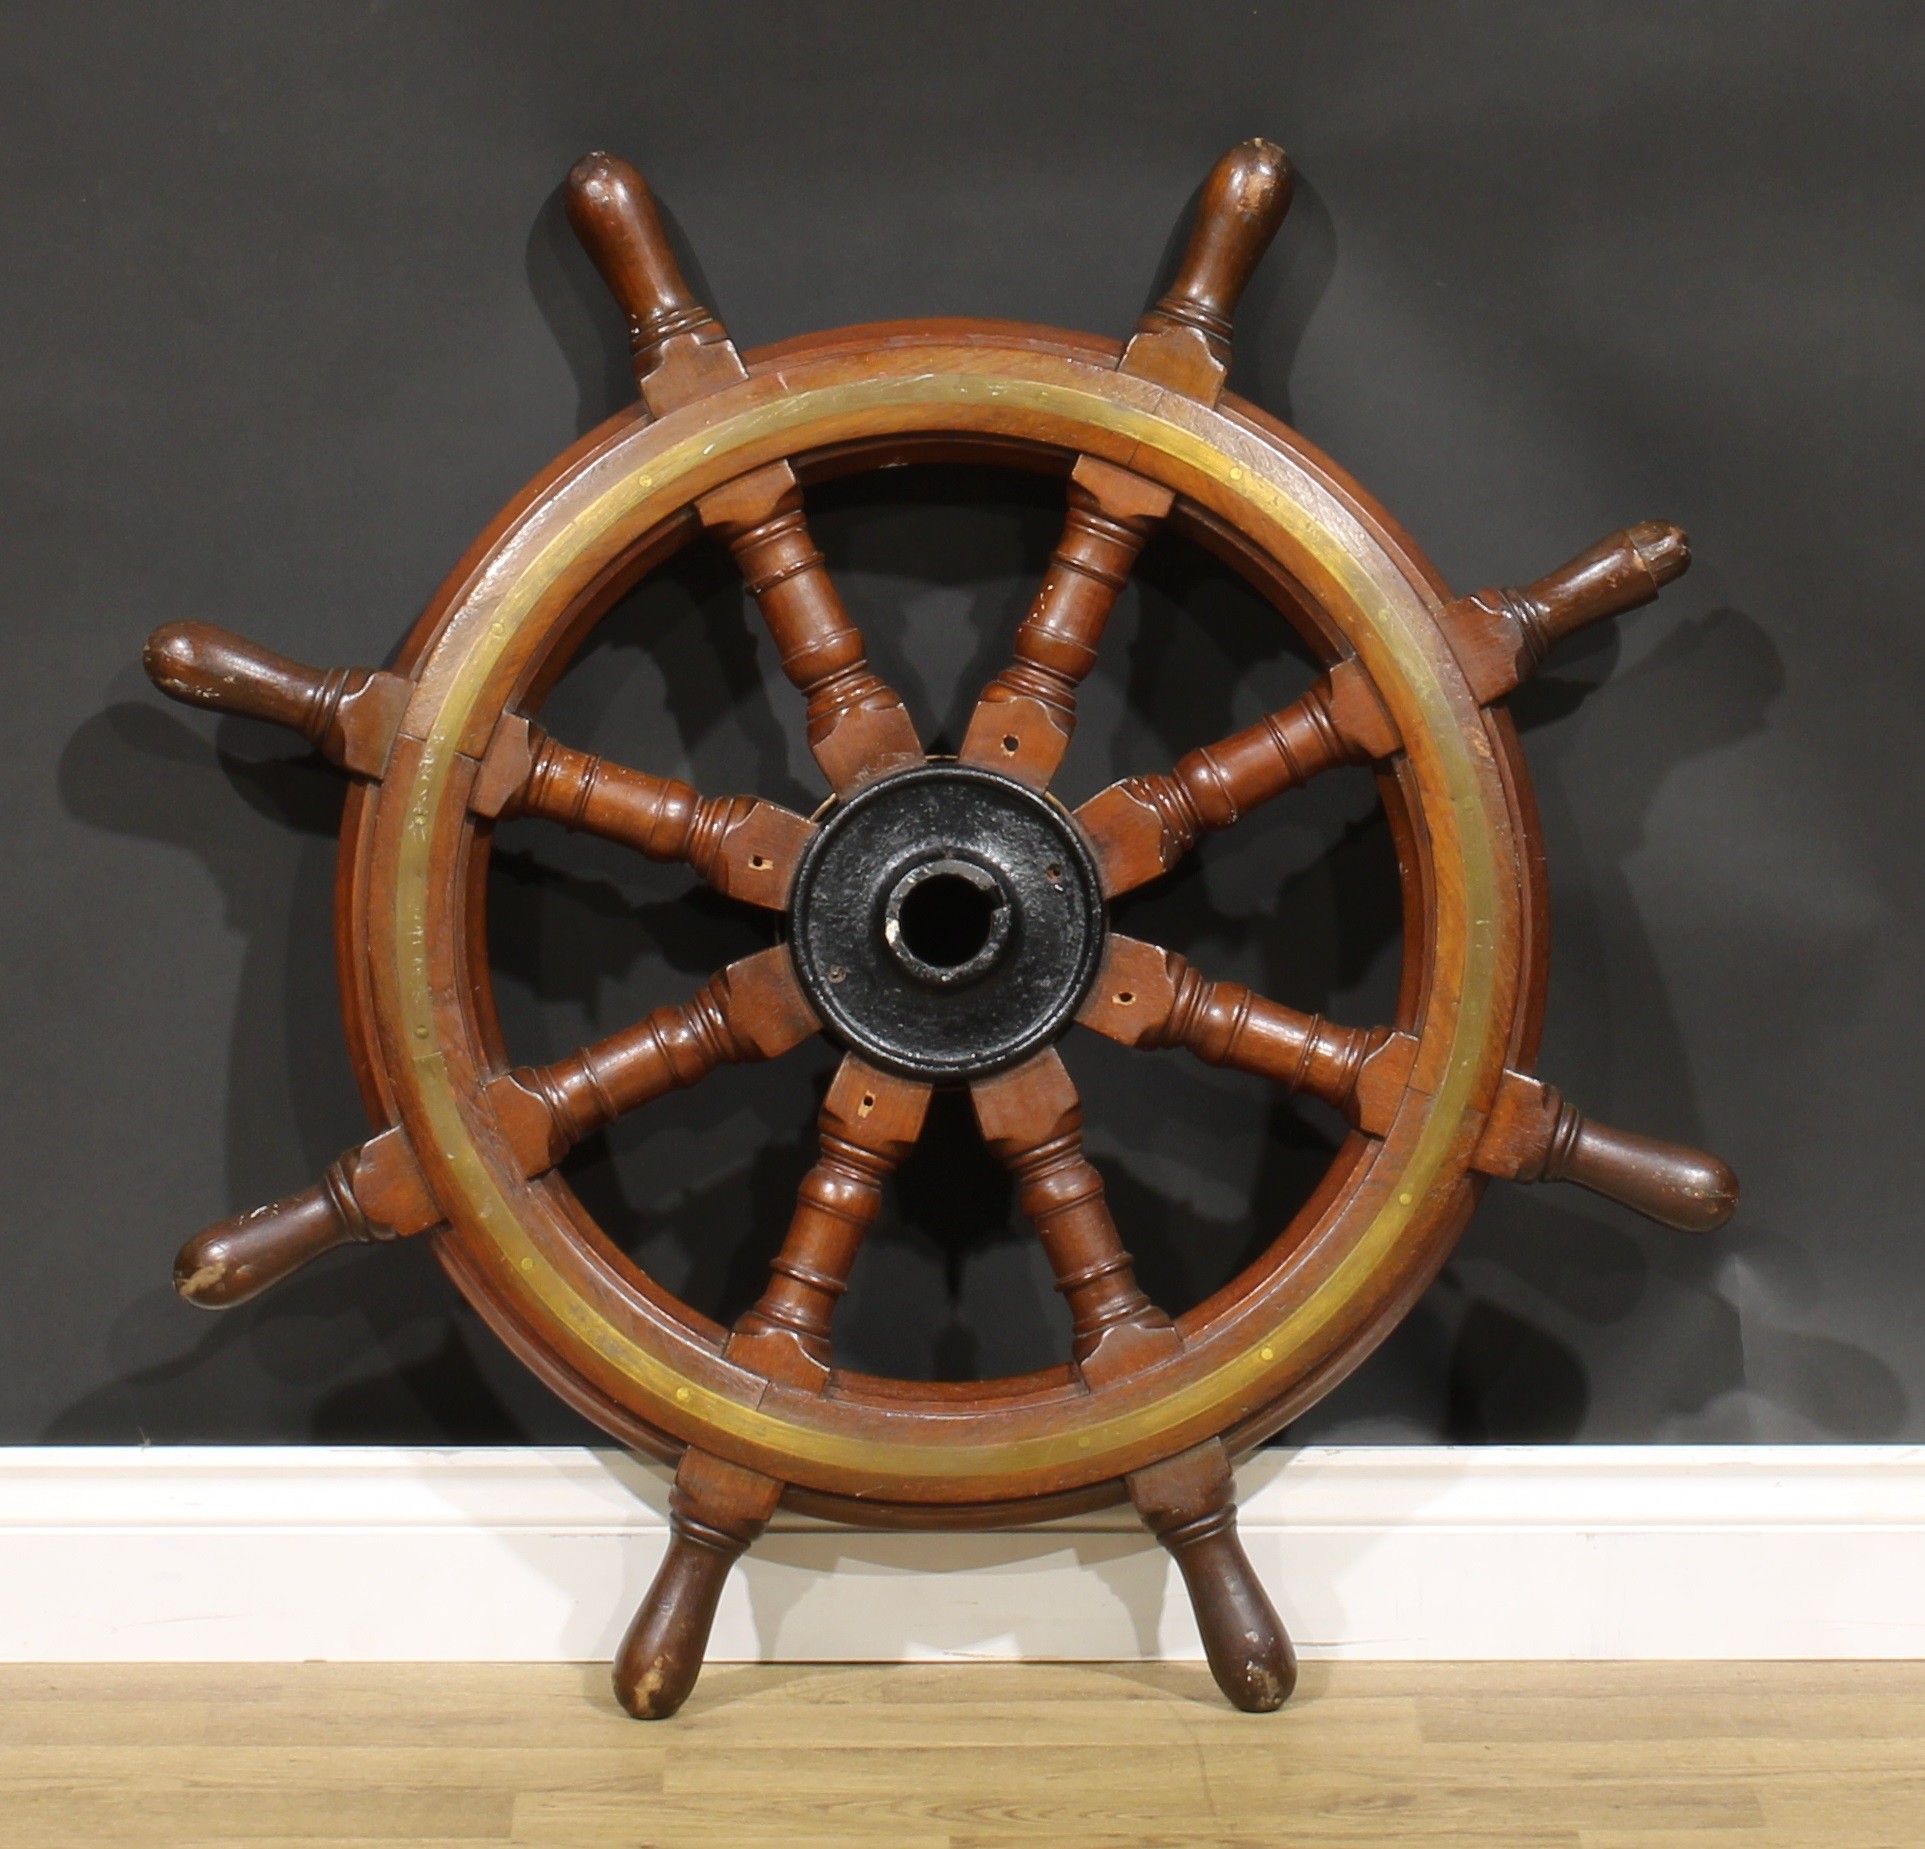 An early 20th century brass bound oak ship’s wheel, iron hub, turned spokes, 93cm diameter